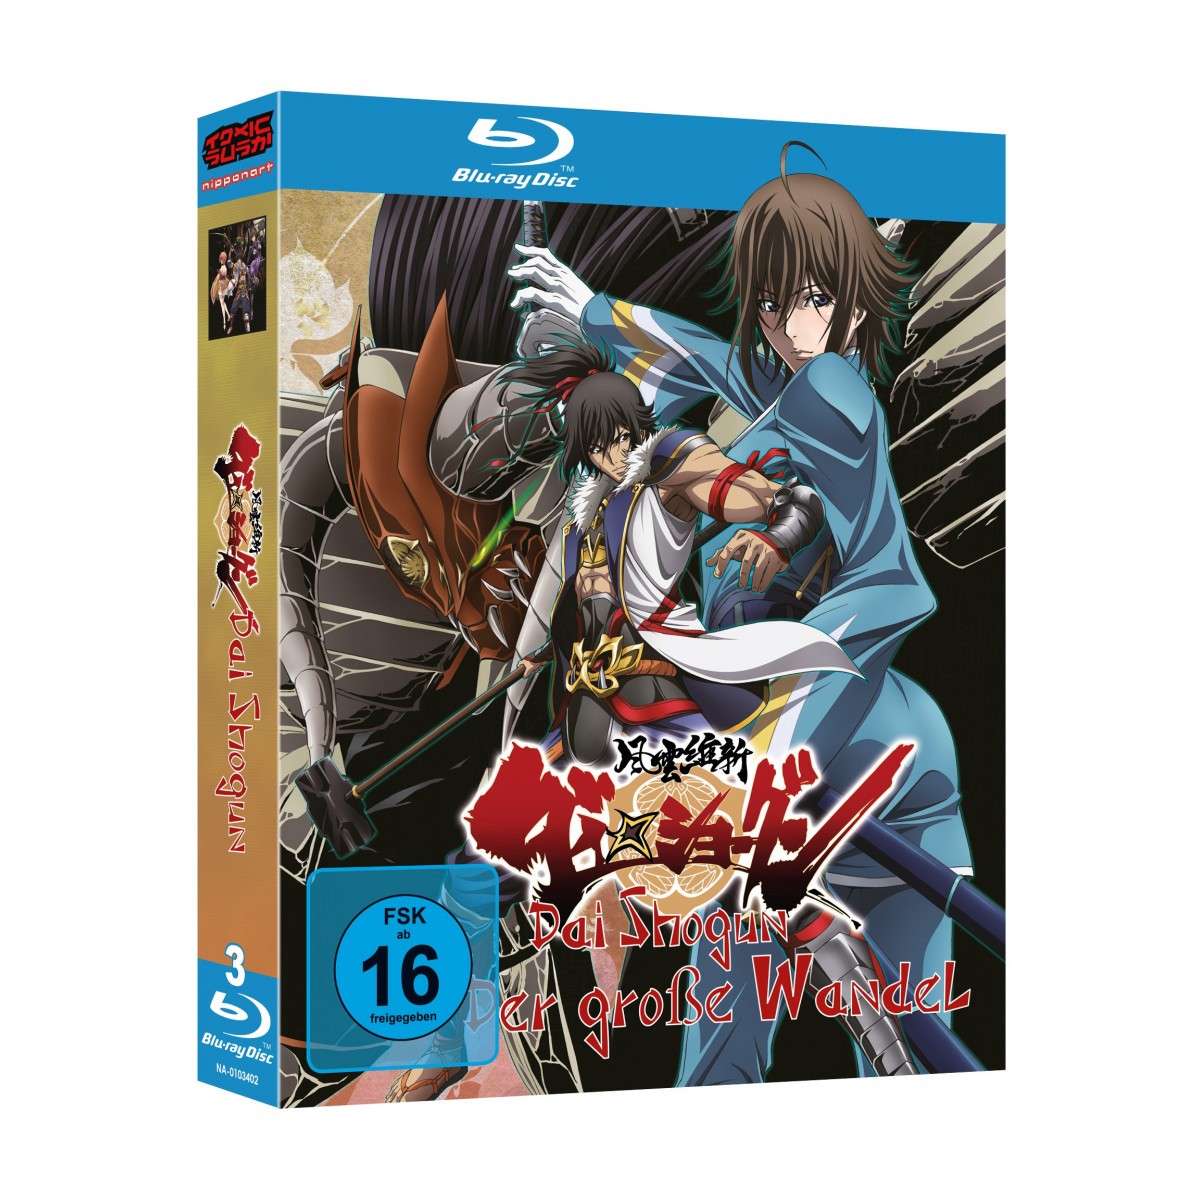 Dai Shogun - Der große Wandel Blu-ray-Edition - nipponart Anime & Manga